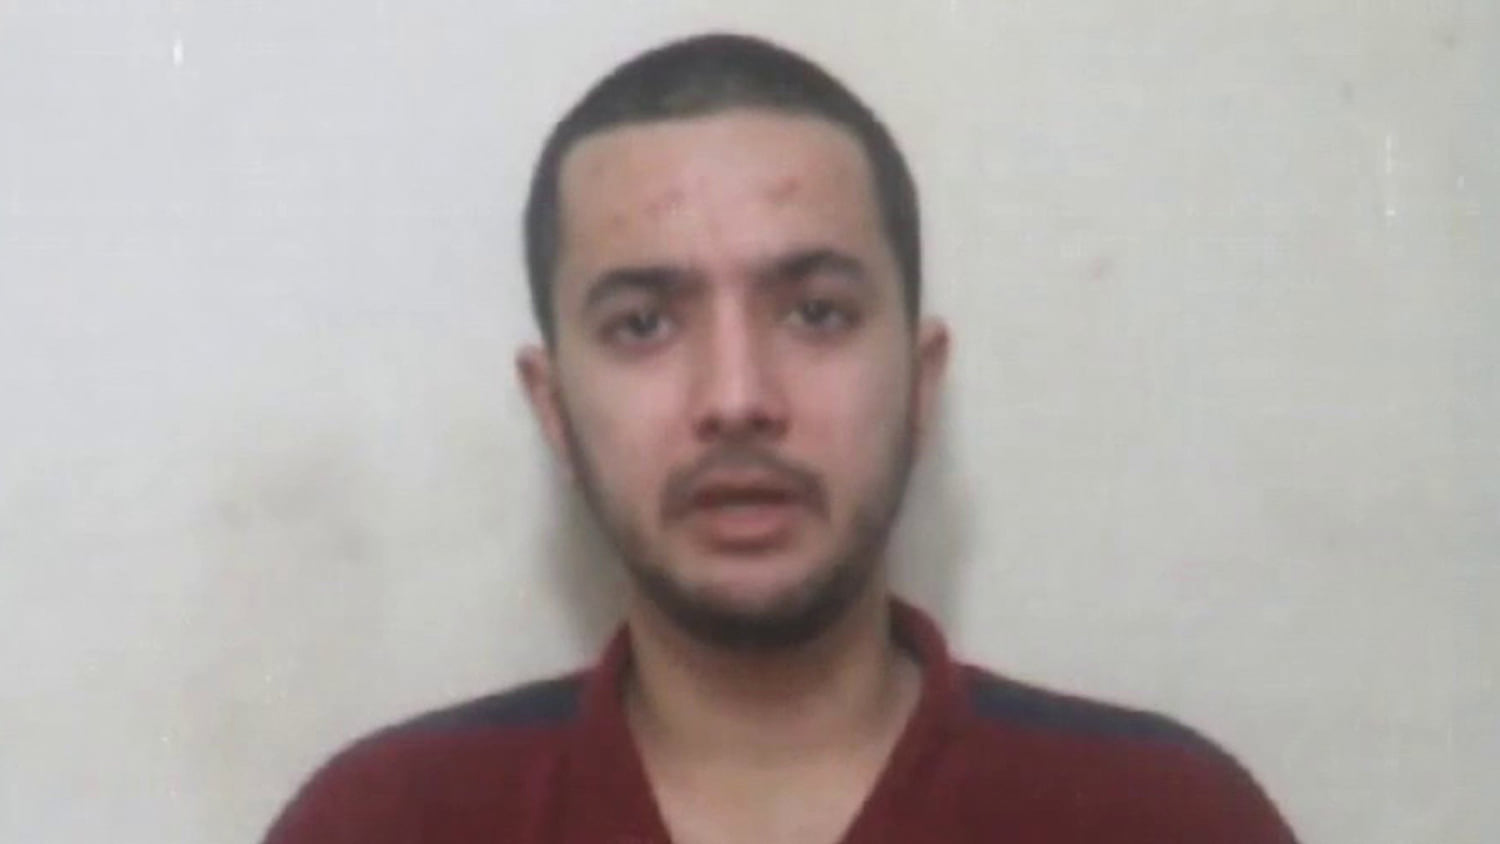 Video released of Israeli American hostage captured by Hamas